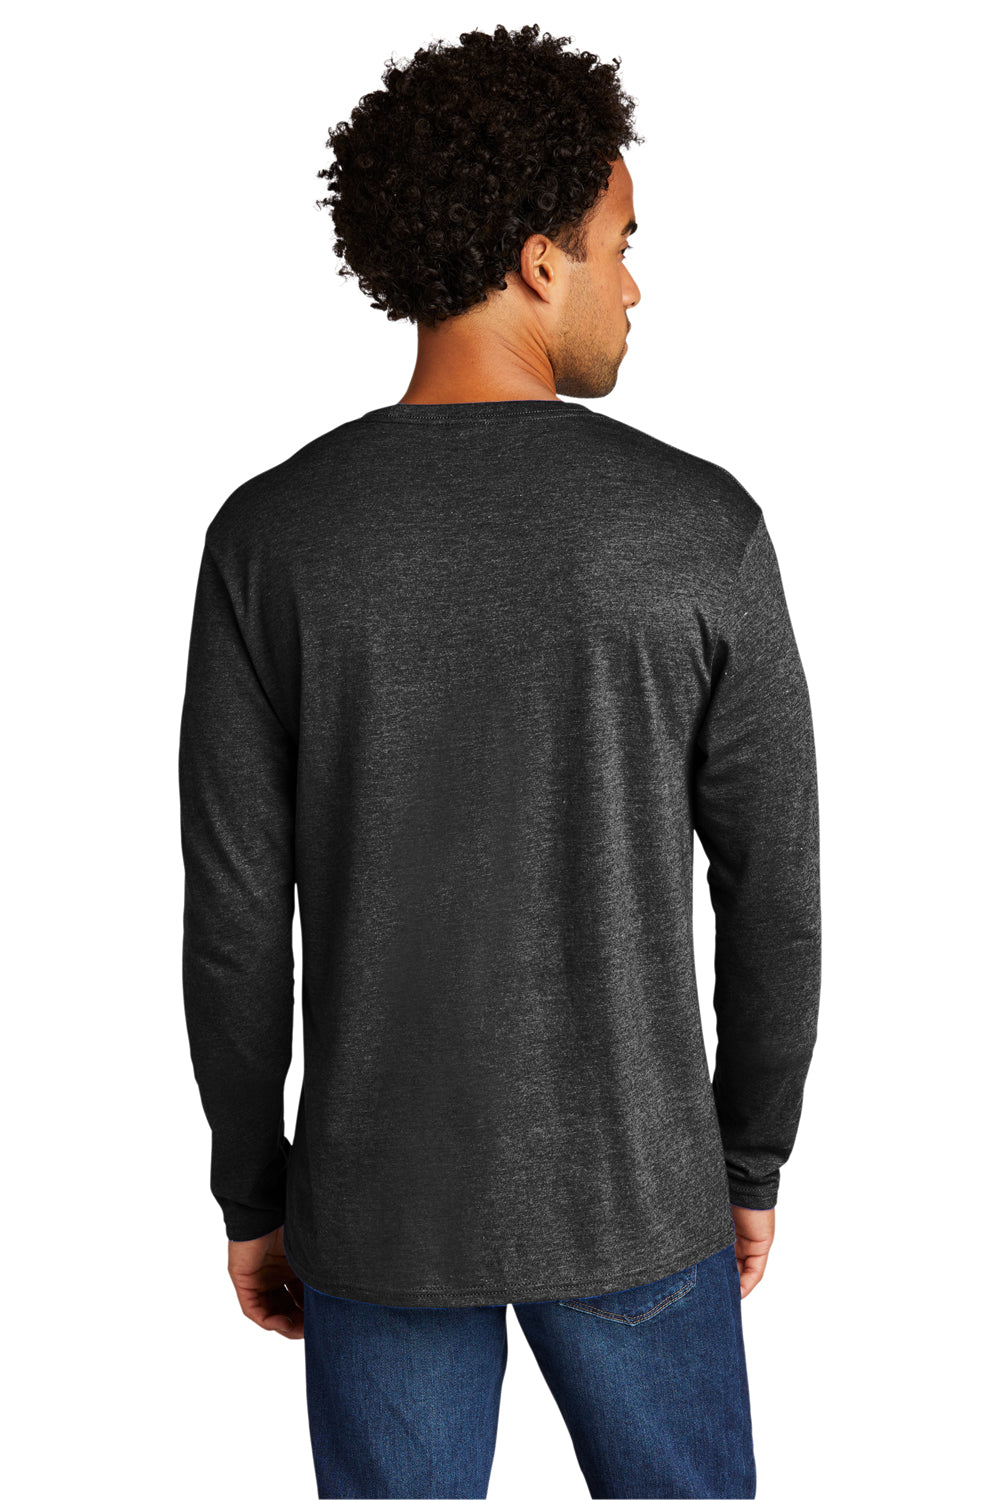 Port & Company Mens Long Sleeve Crewneck T-Shirt Heather Black Side